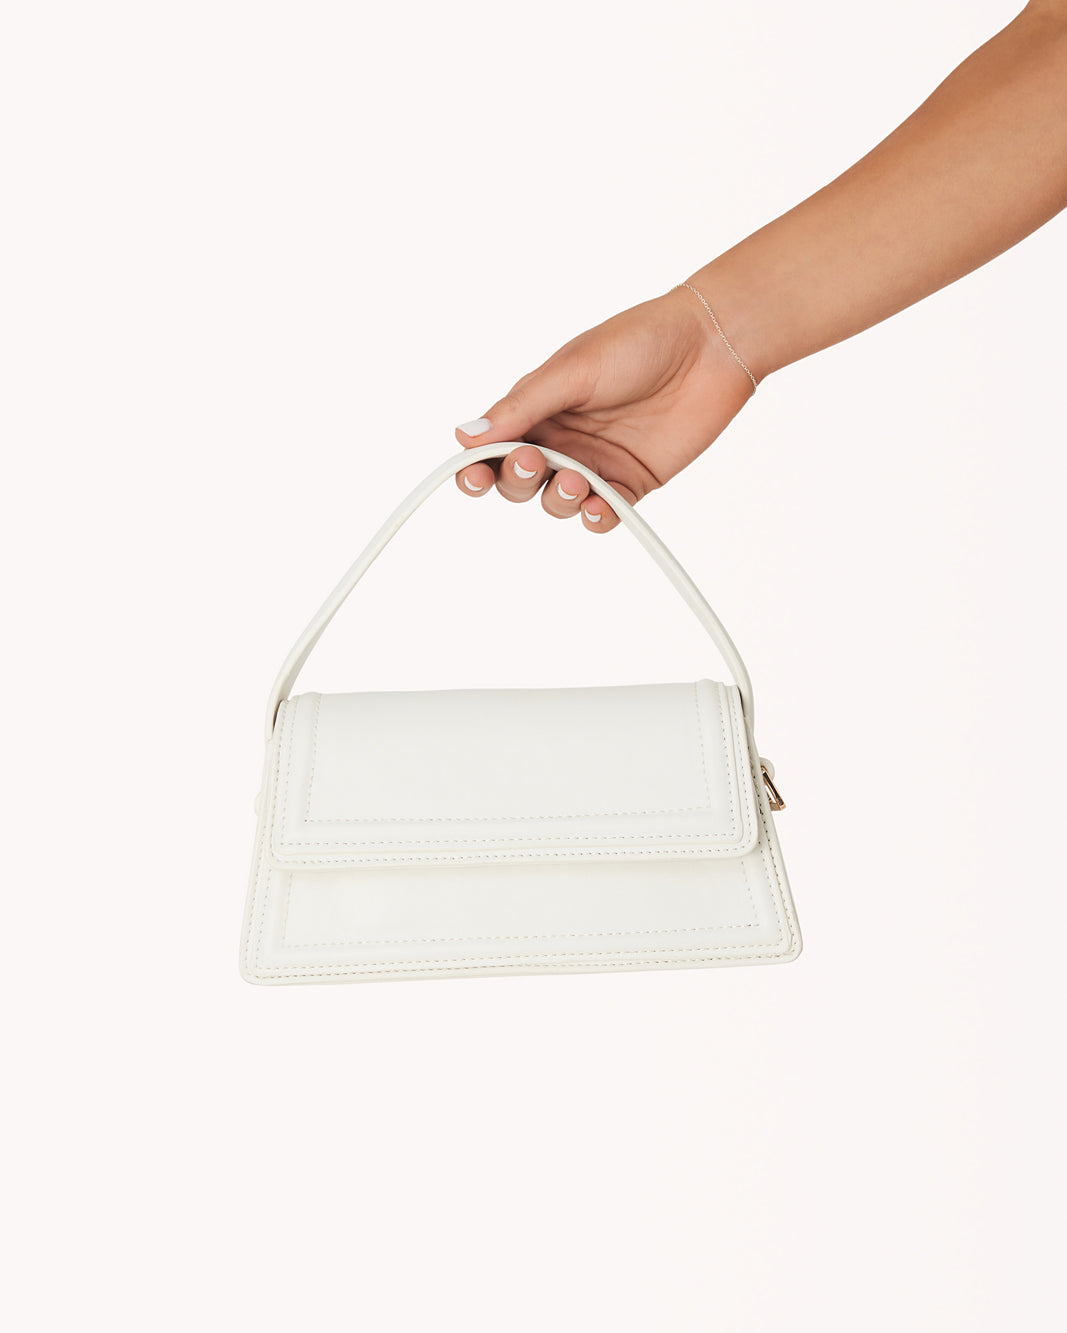 MARBLE HANDLE BAG - BONE-Handbags-Billini-O/S-Billini